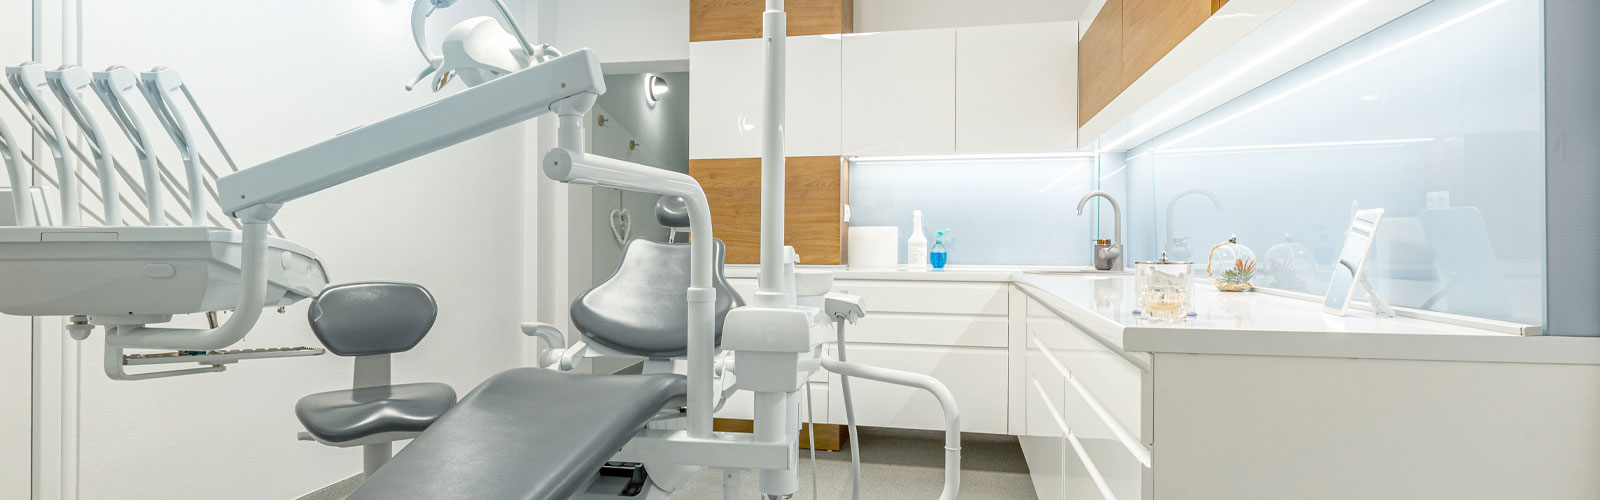 Dental Operatory Design for Sedation Dentistry